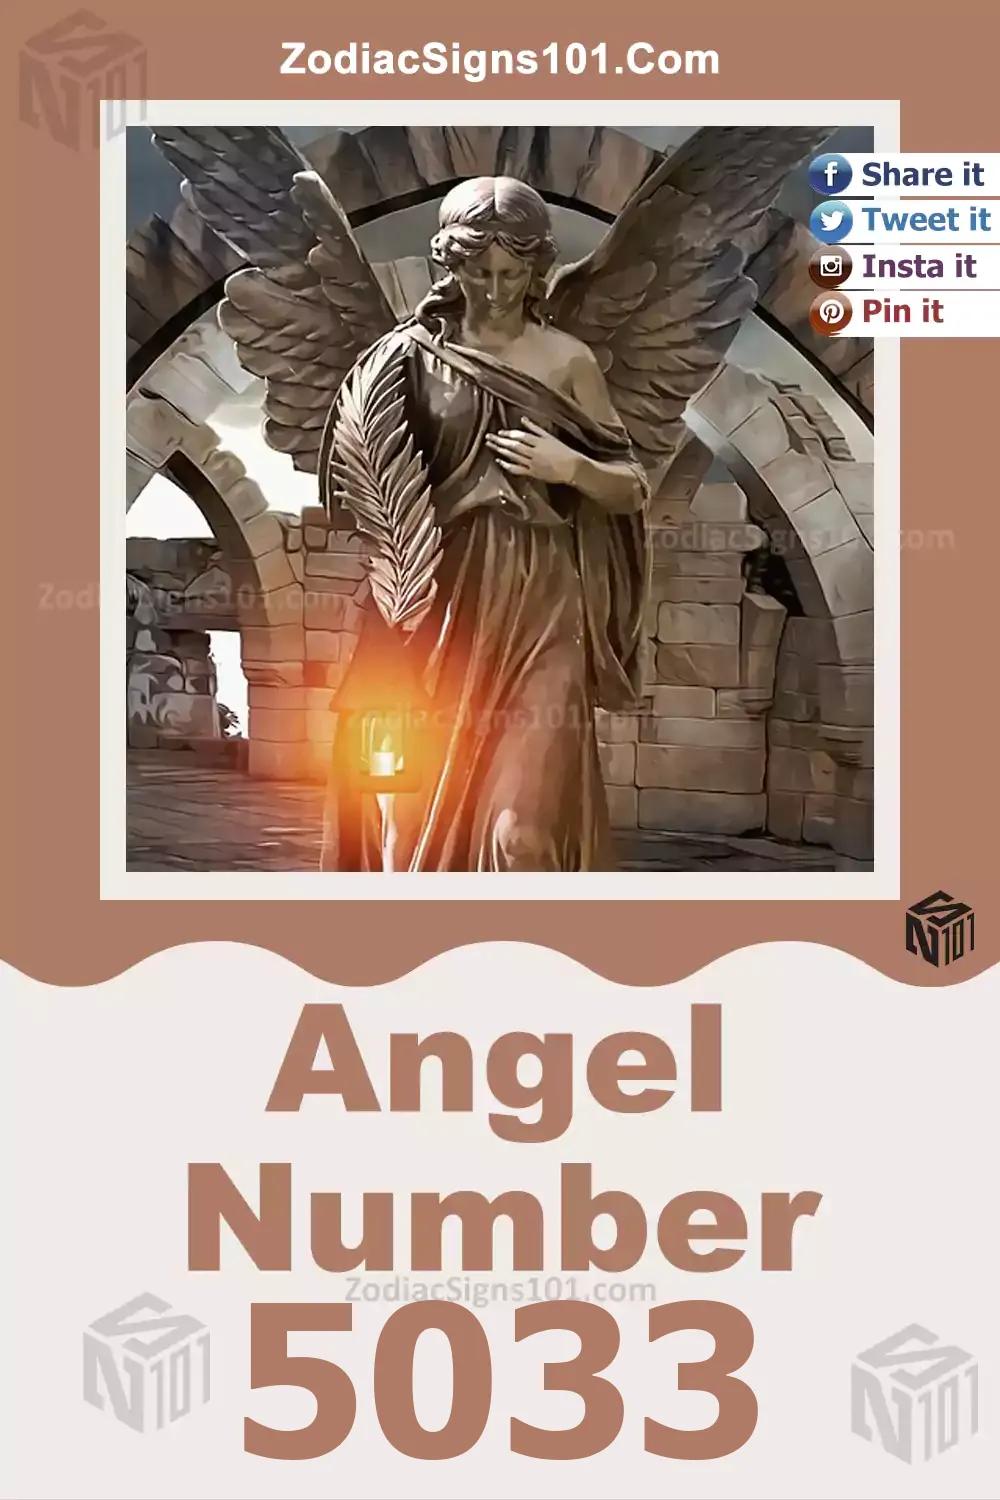 5033-Angel-Number-Meaning.jpg